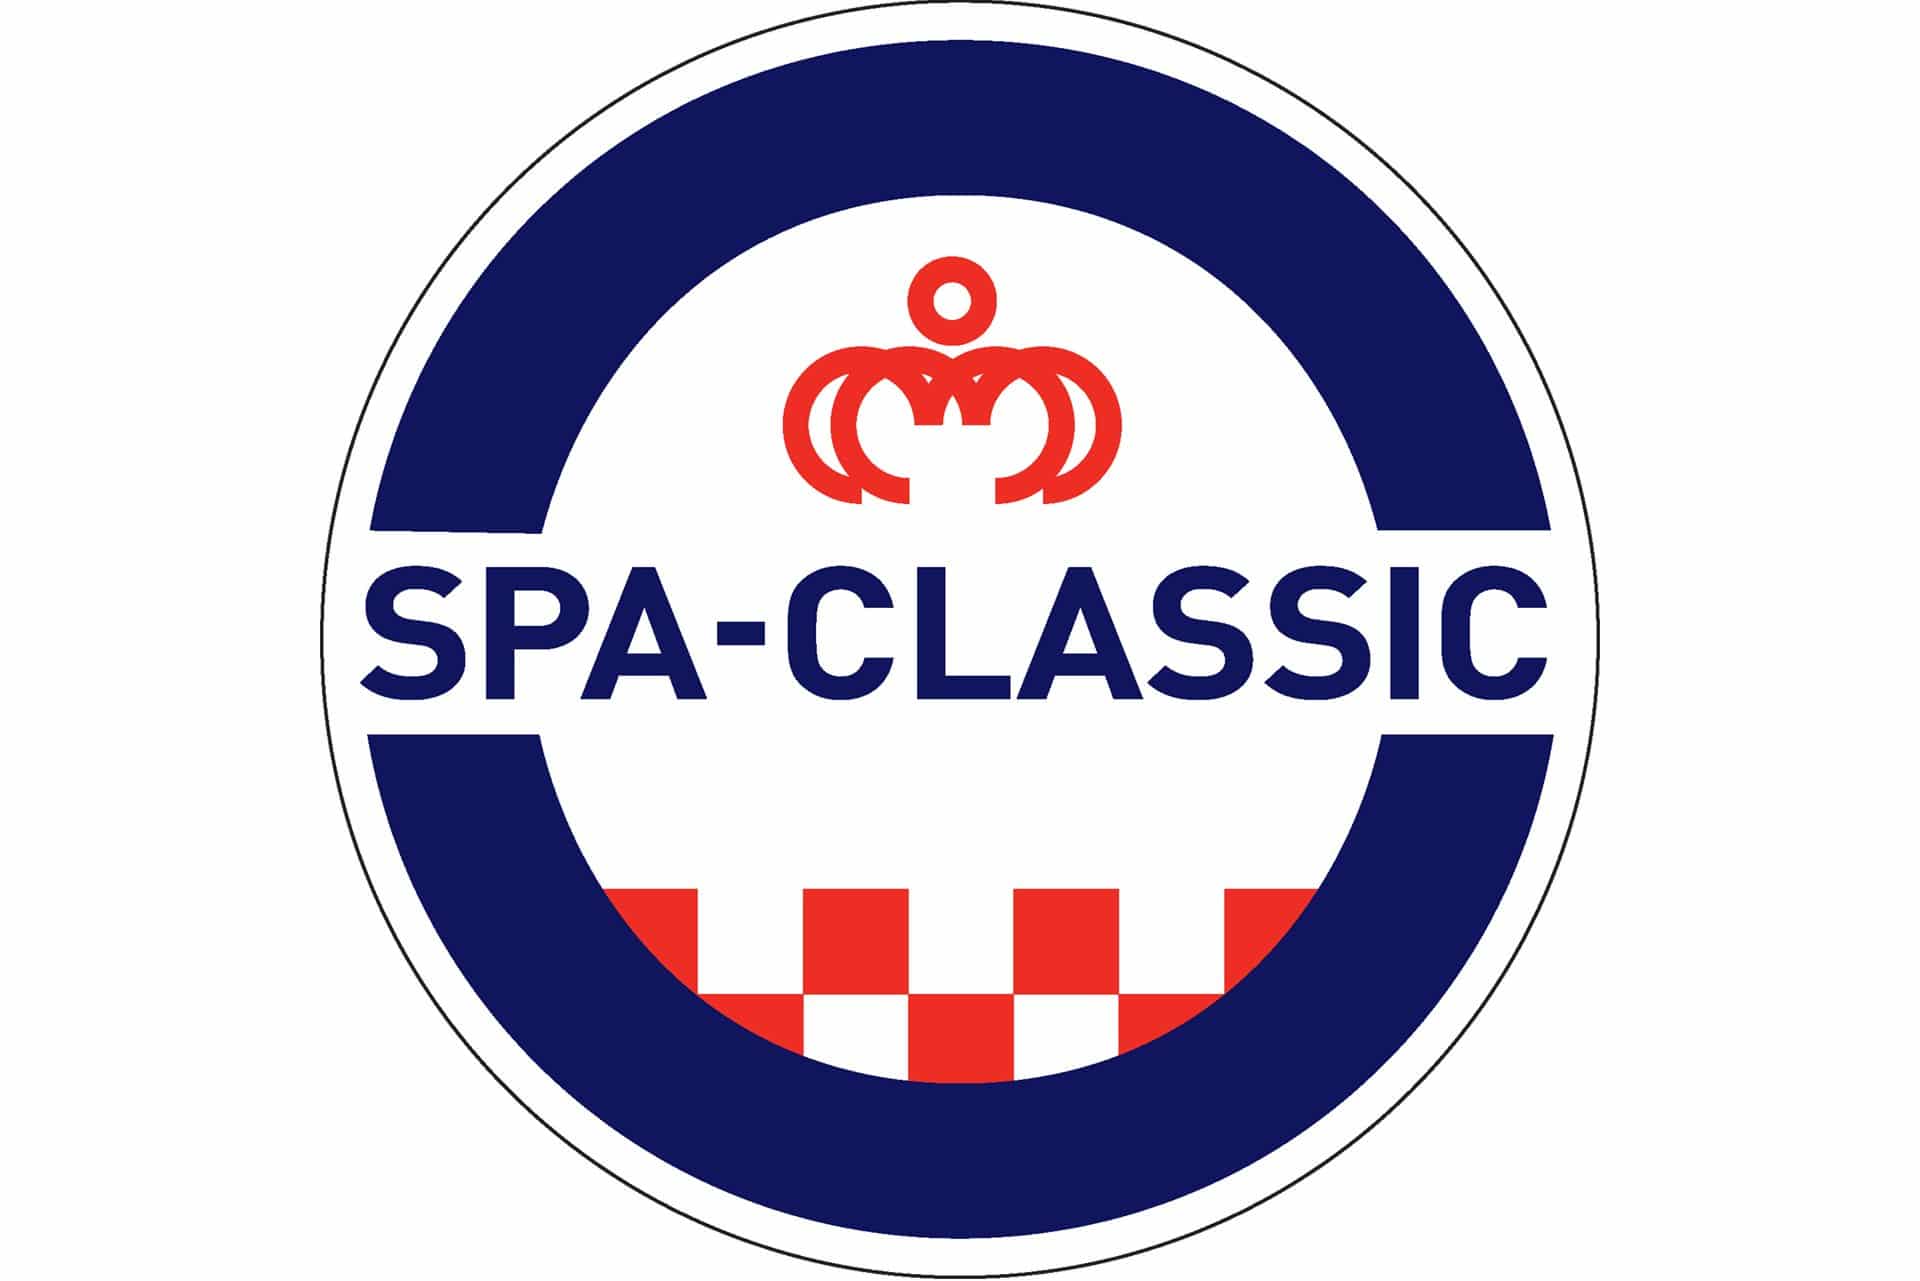 Spa-Classic 2020